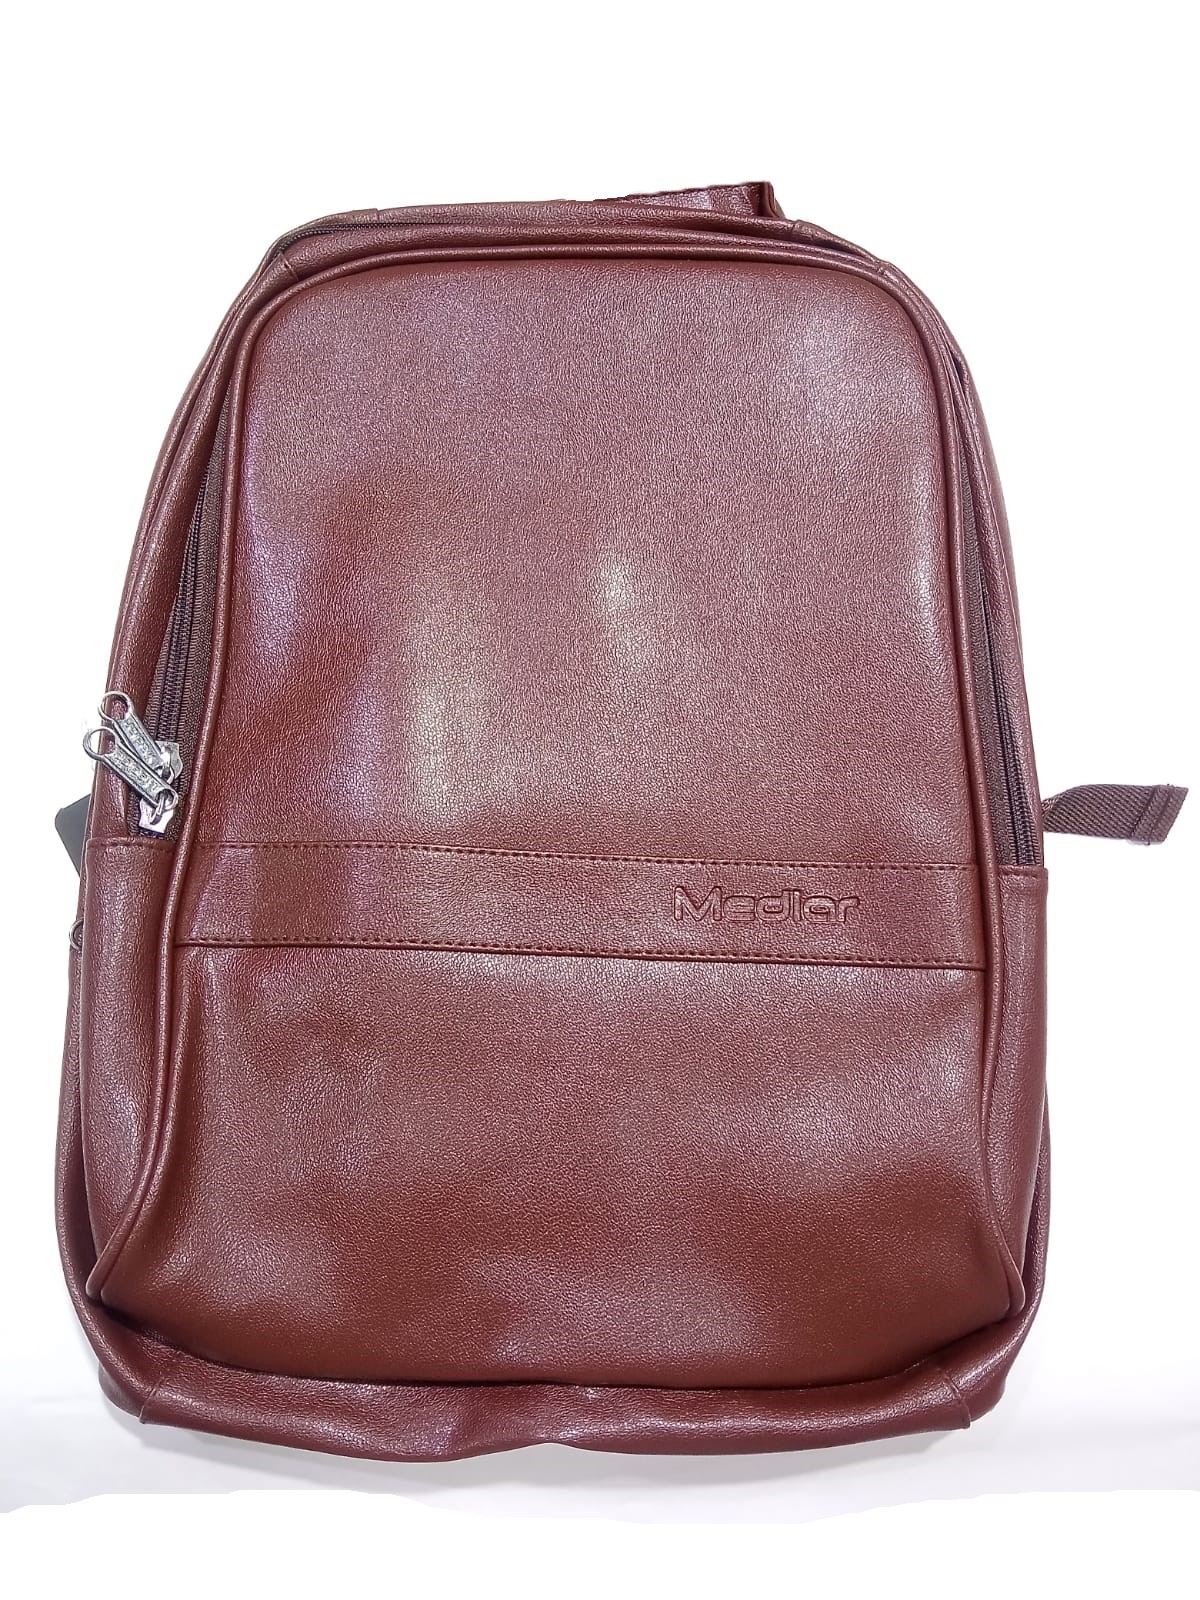 Mediar Bag (Dark Brown)